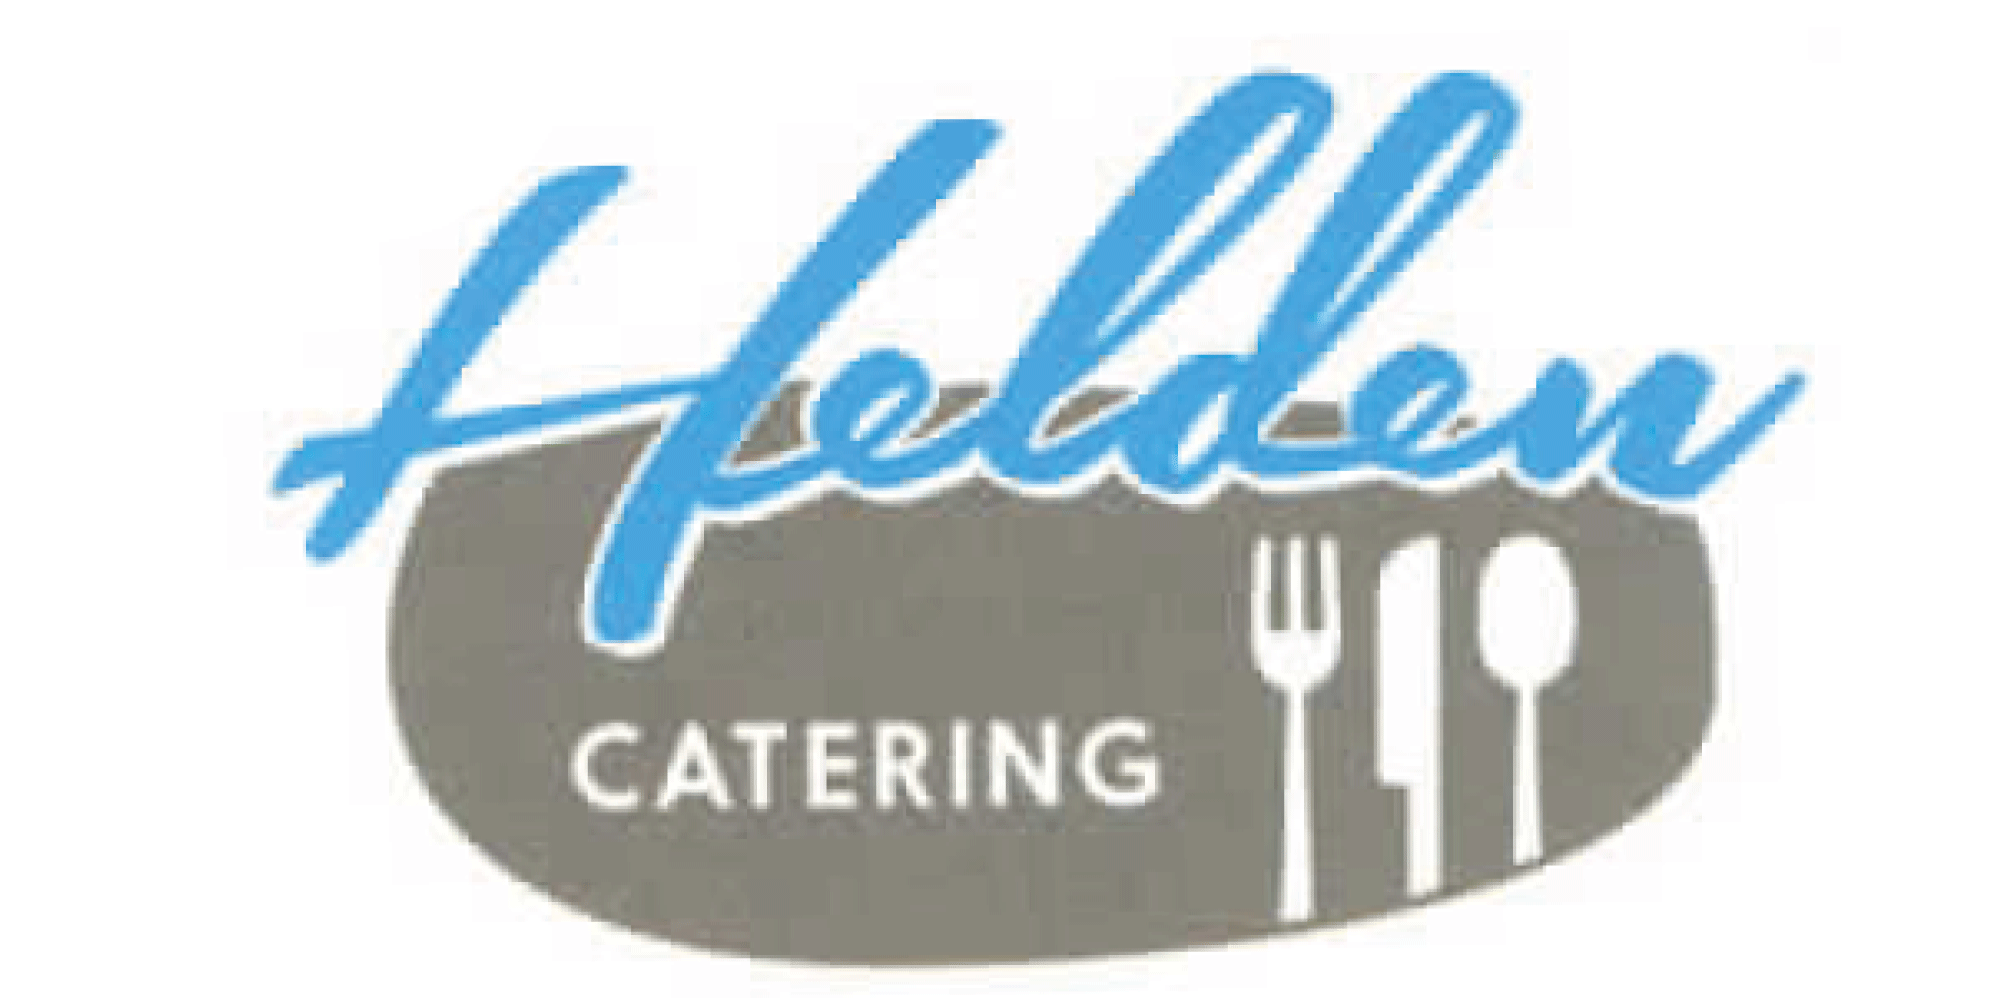 helden_catering_-in-stockelsforf-logo